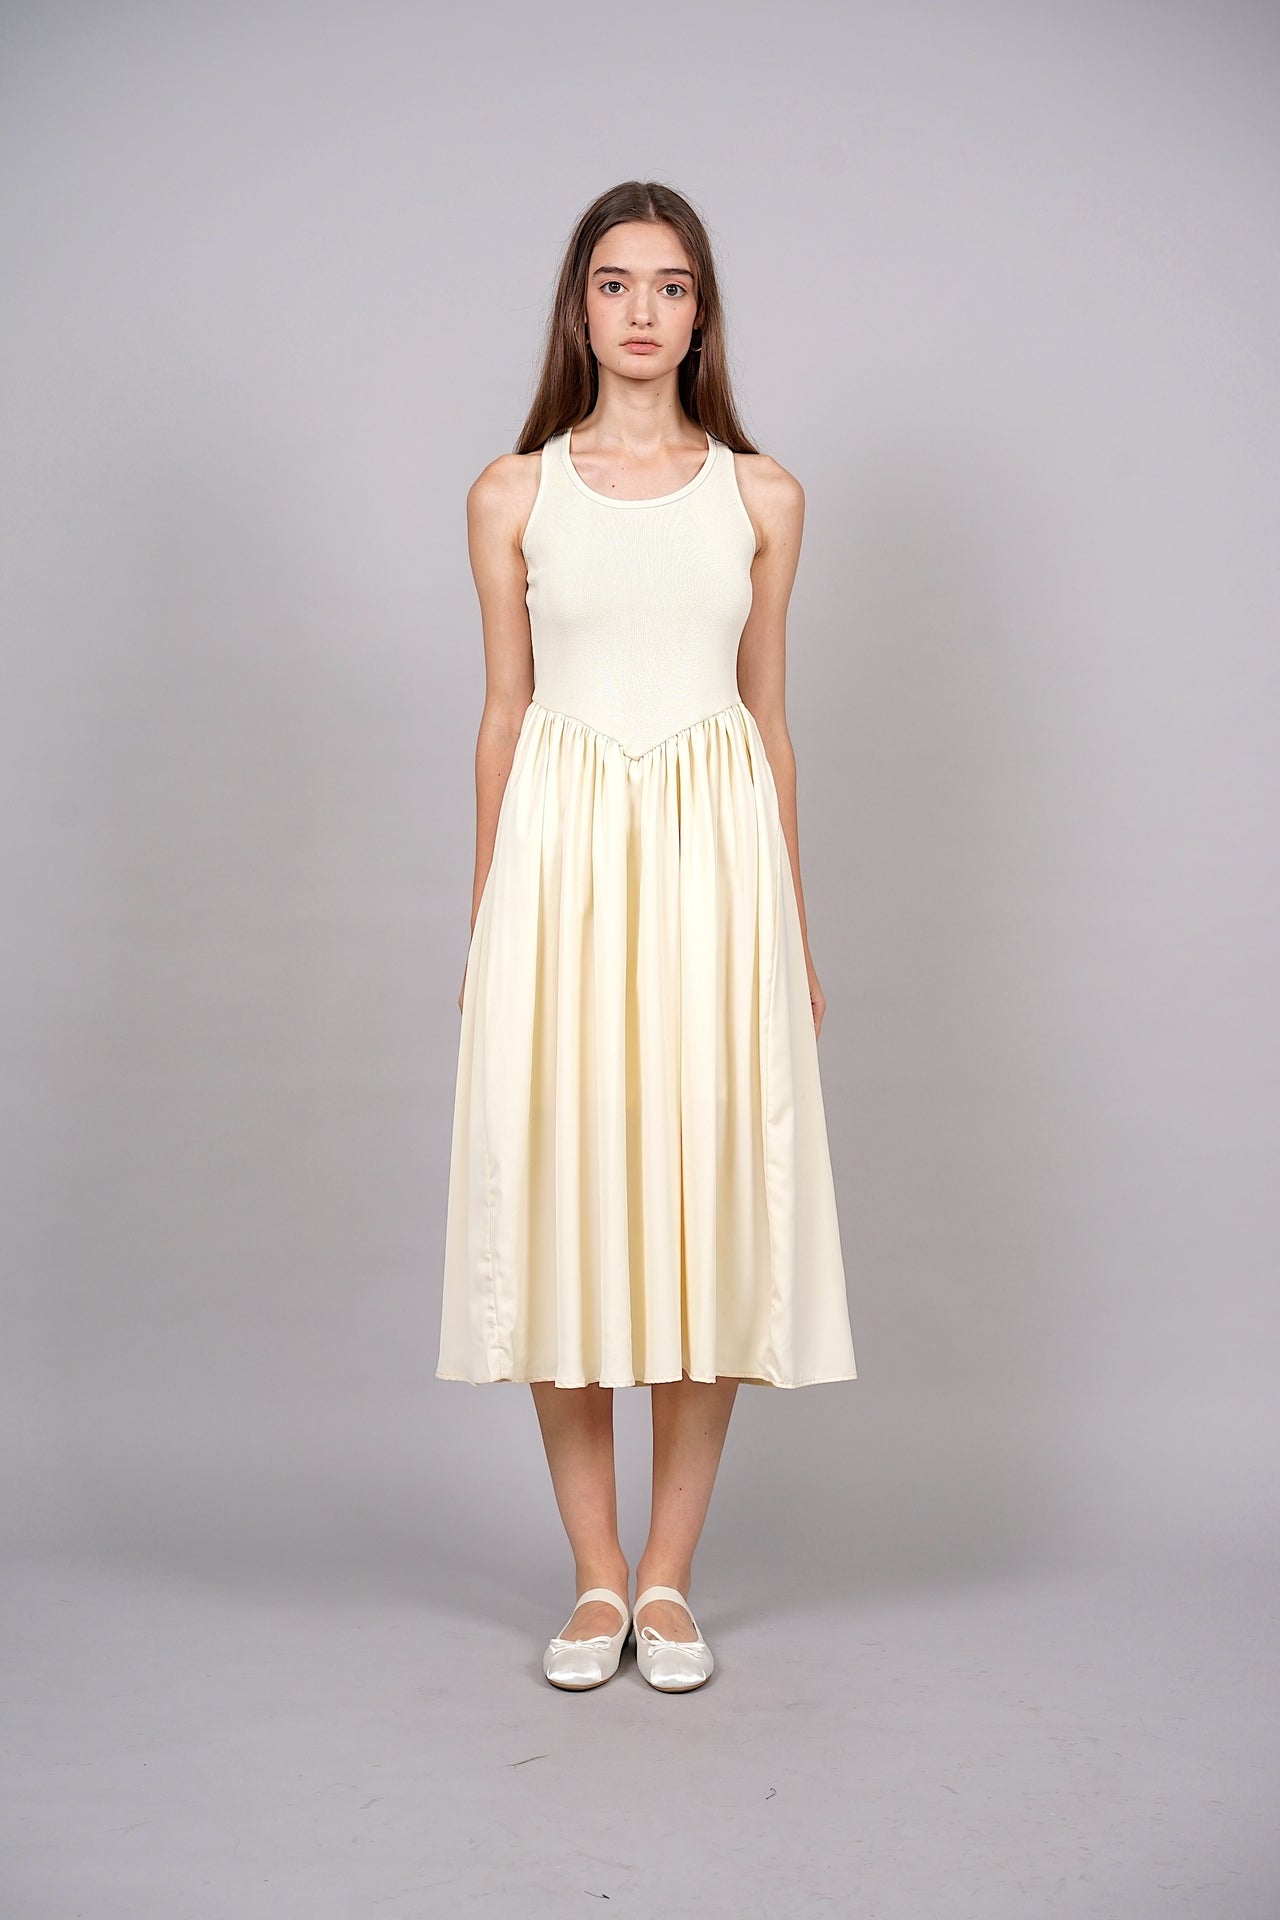 EVERYDAY / Gathered Midi Dress in Cream